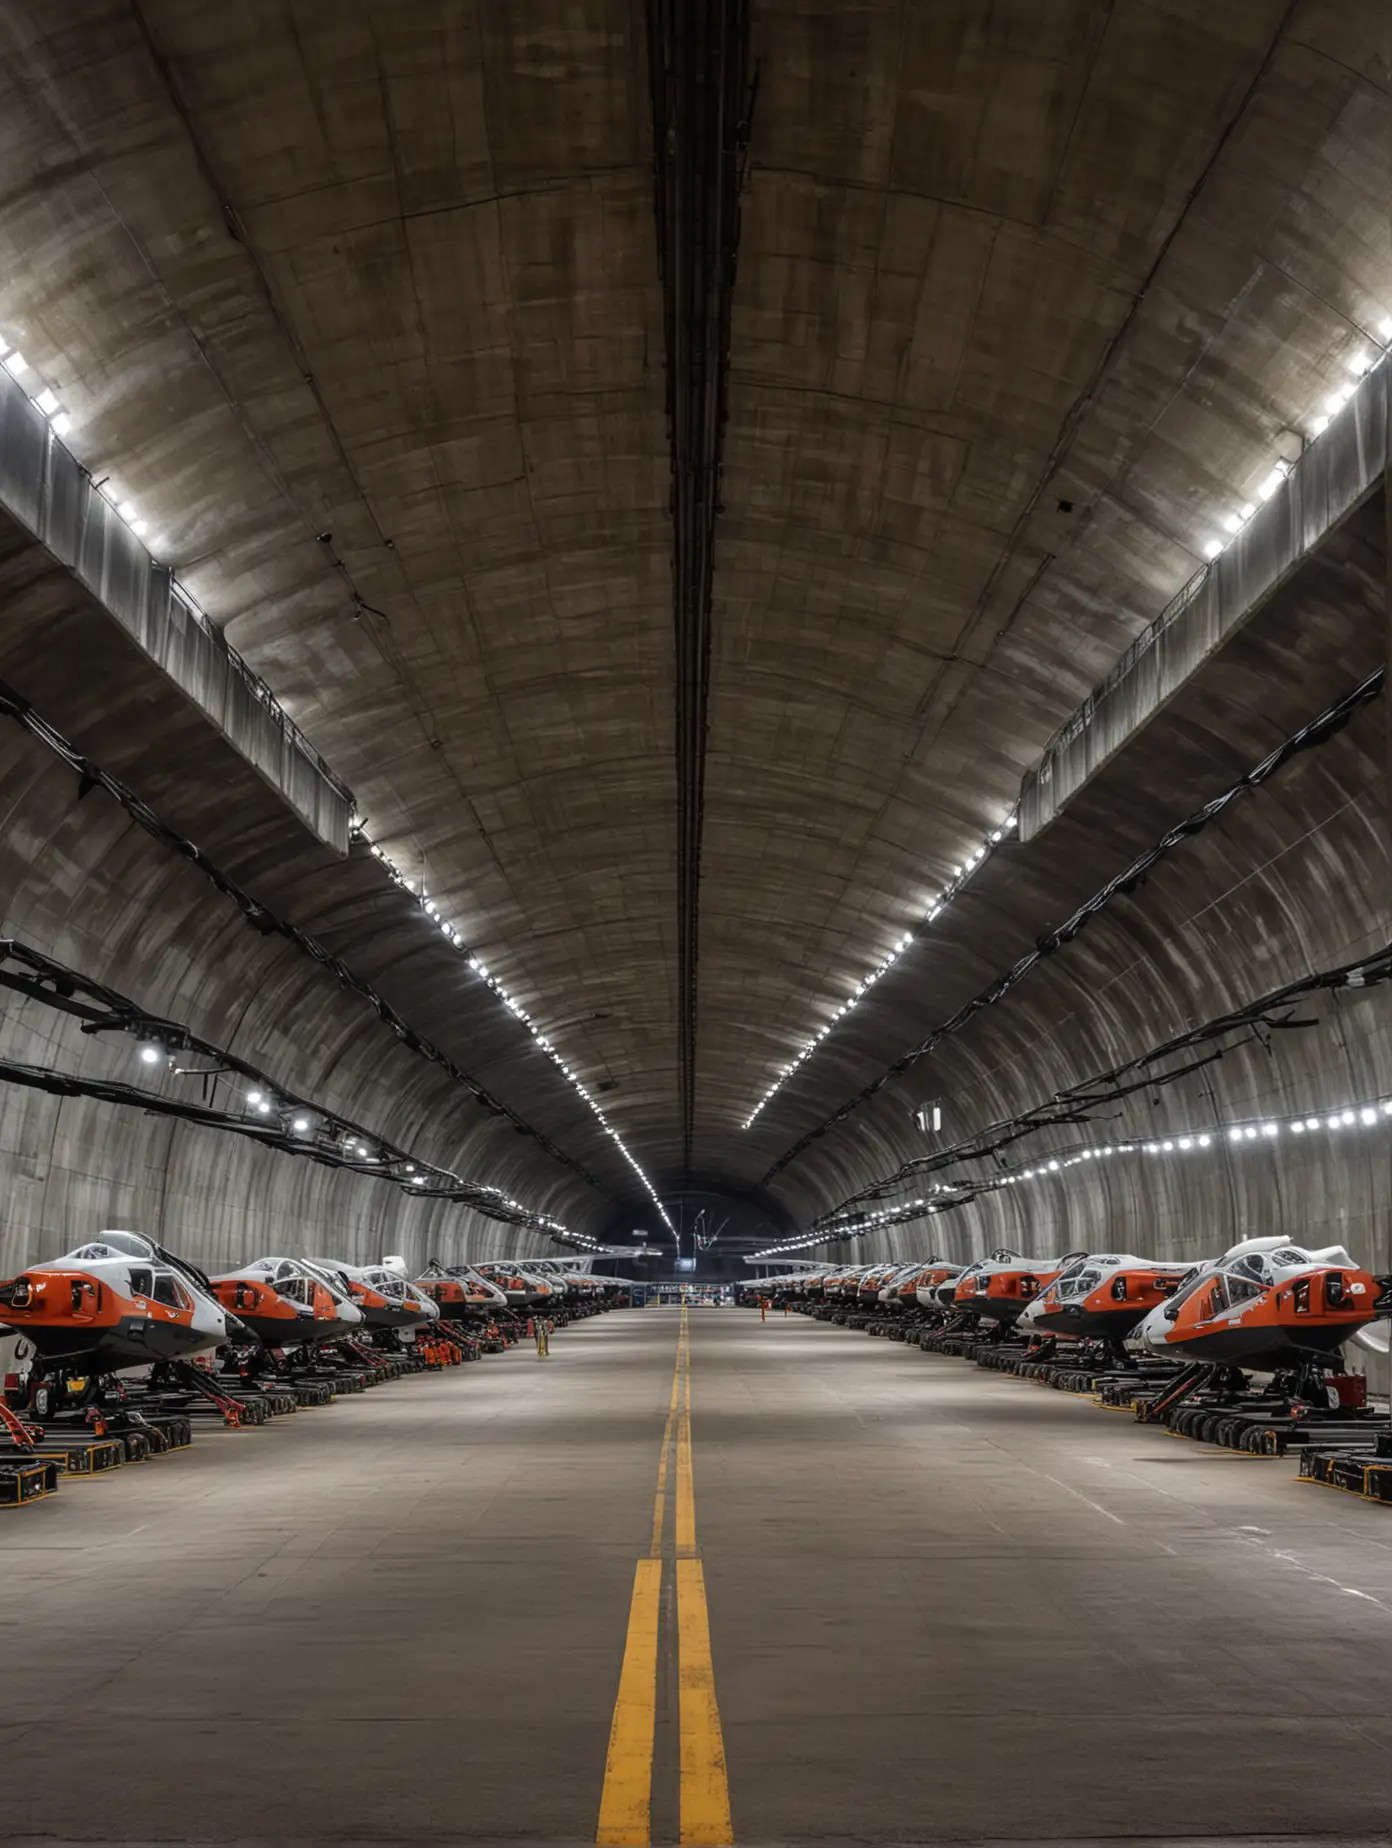 Symmetric Picture of a Massive Underground Hangar